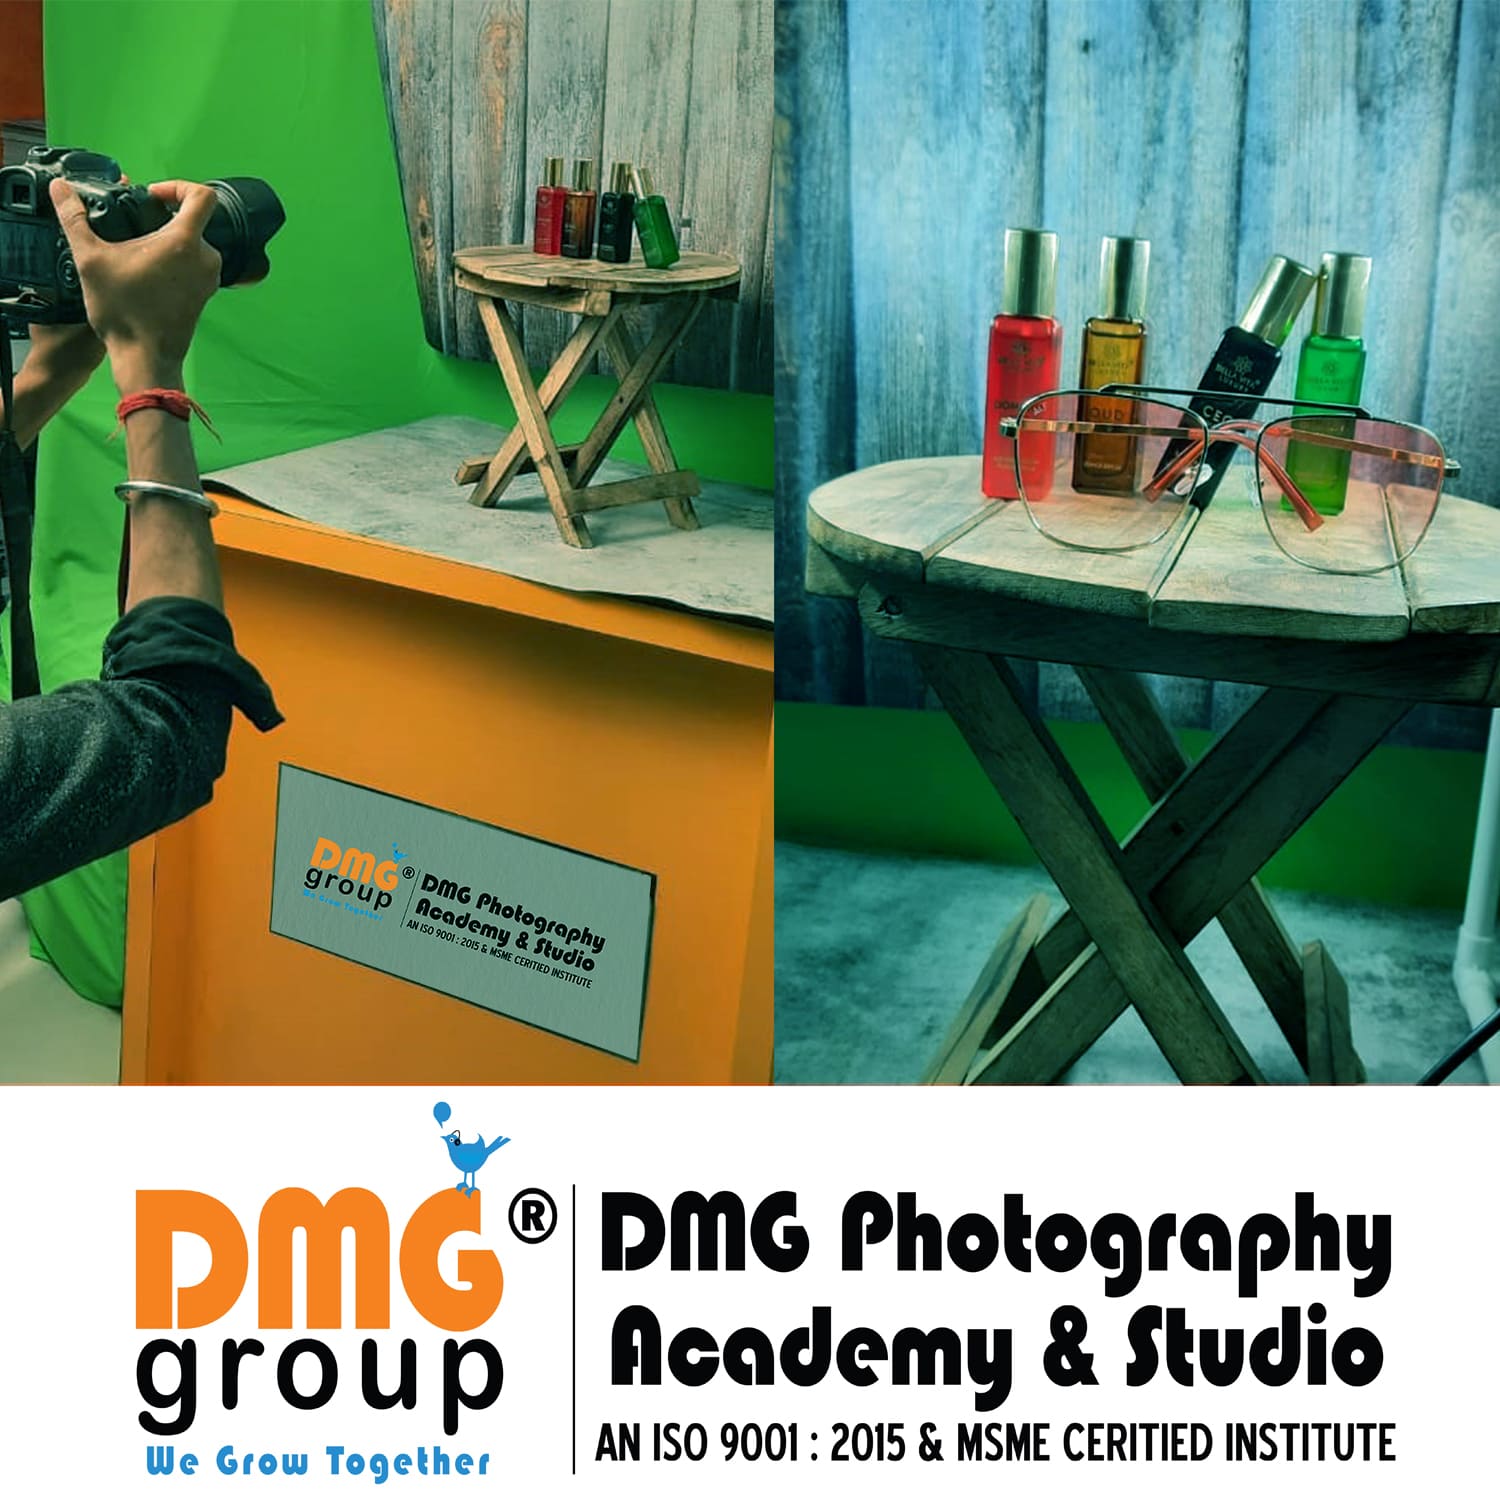 DMG photography Academy & Studio